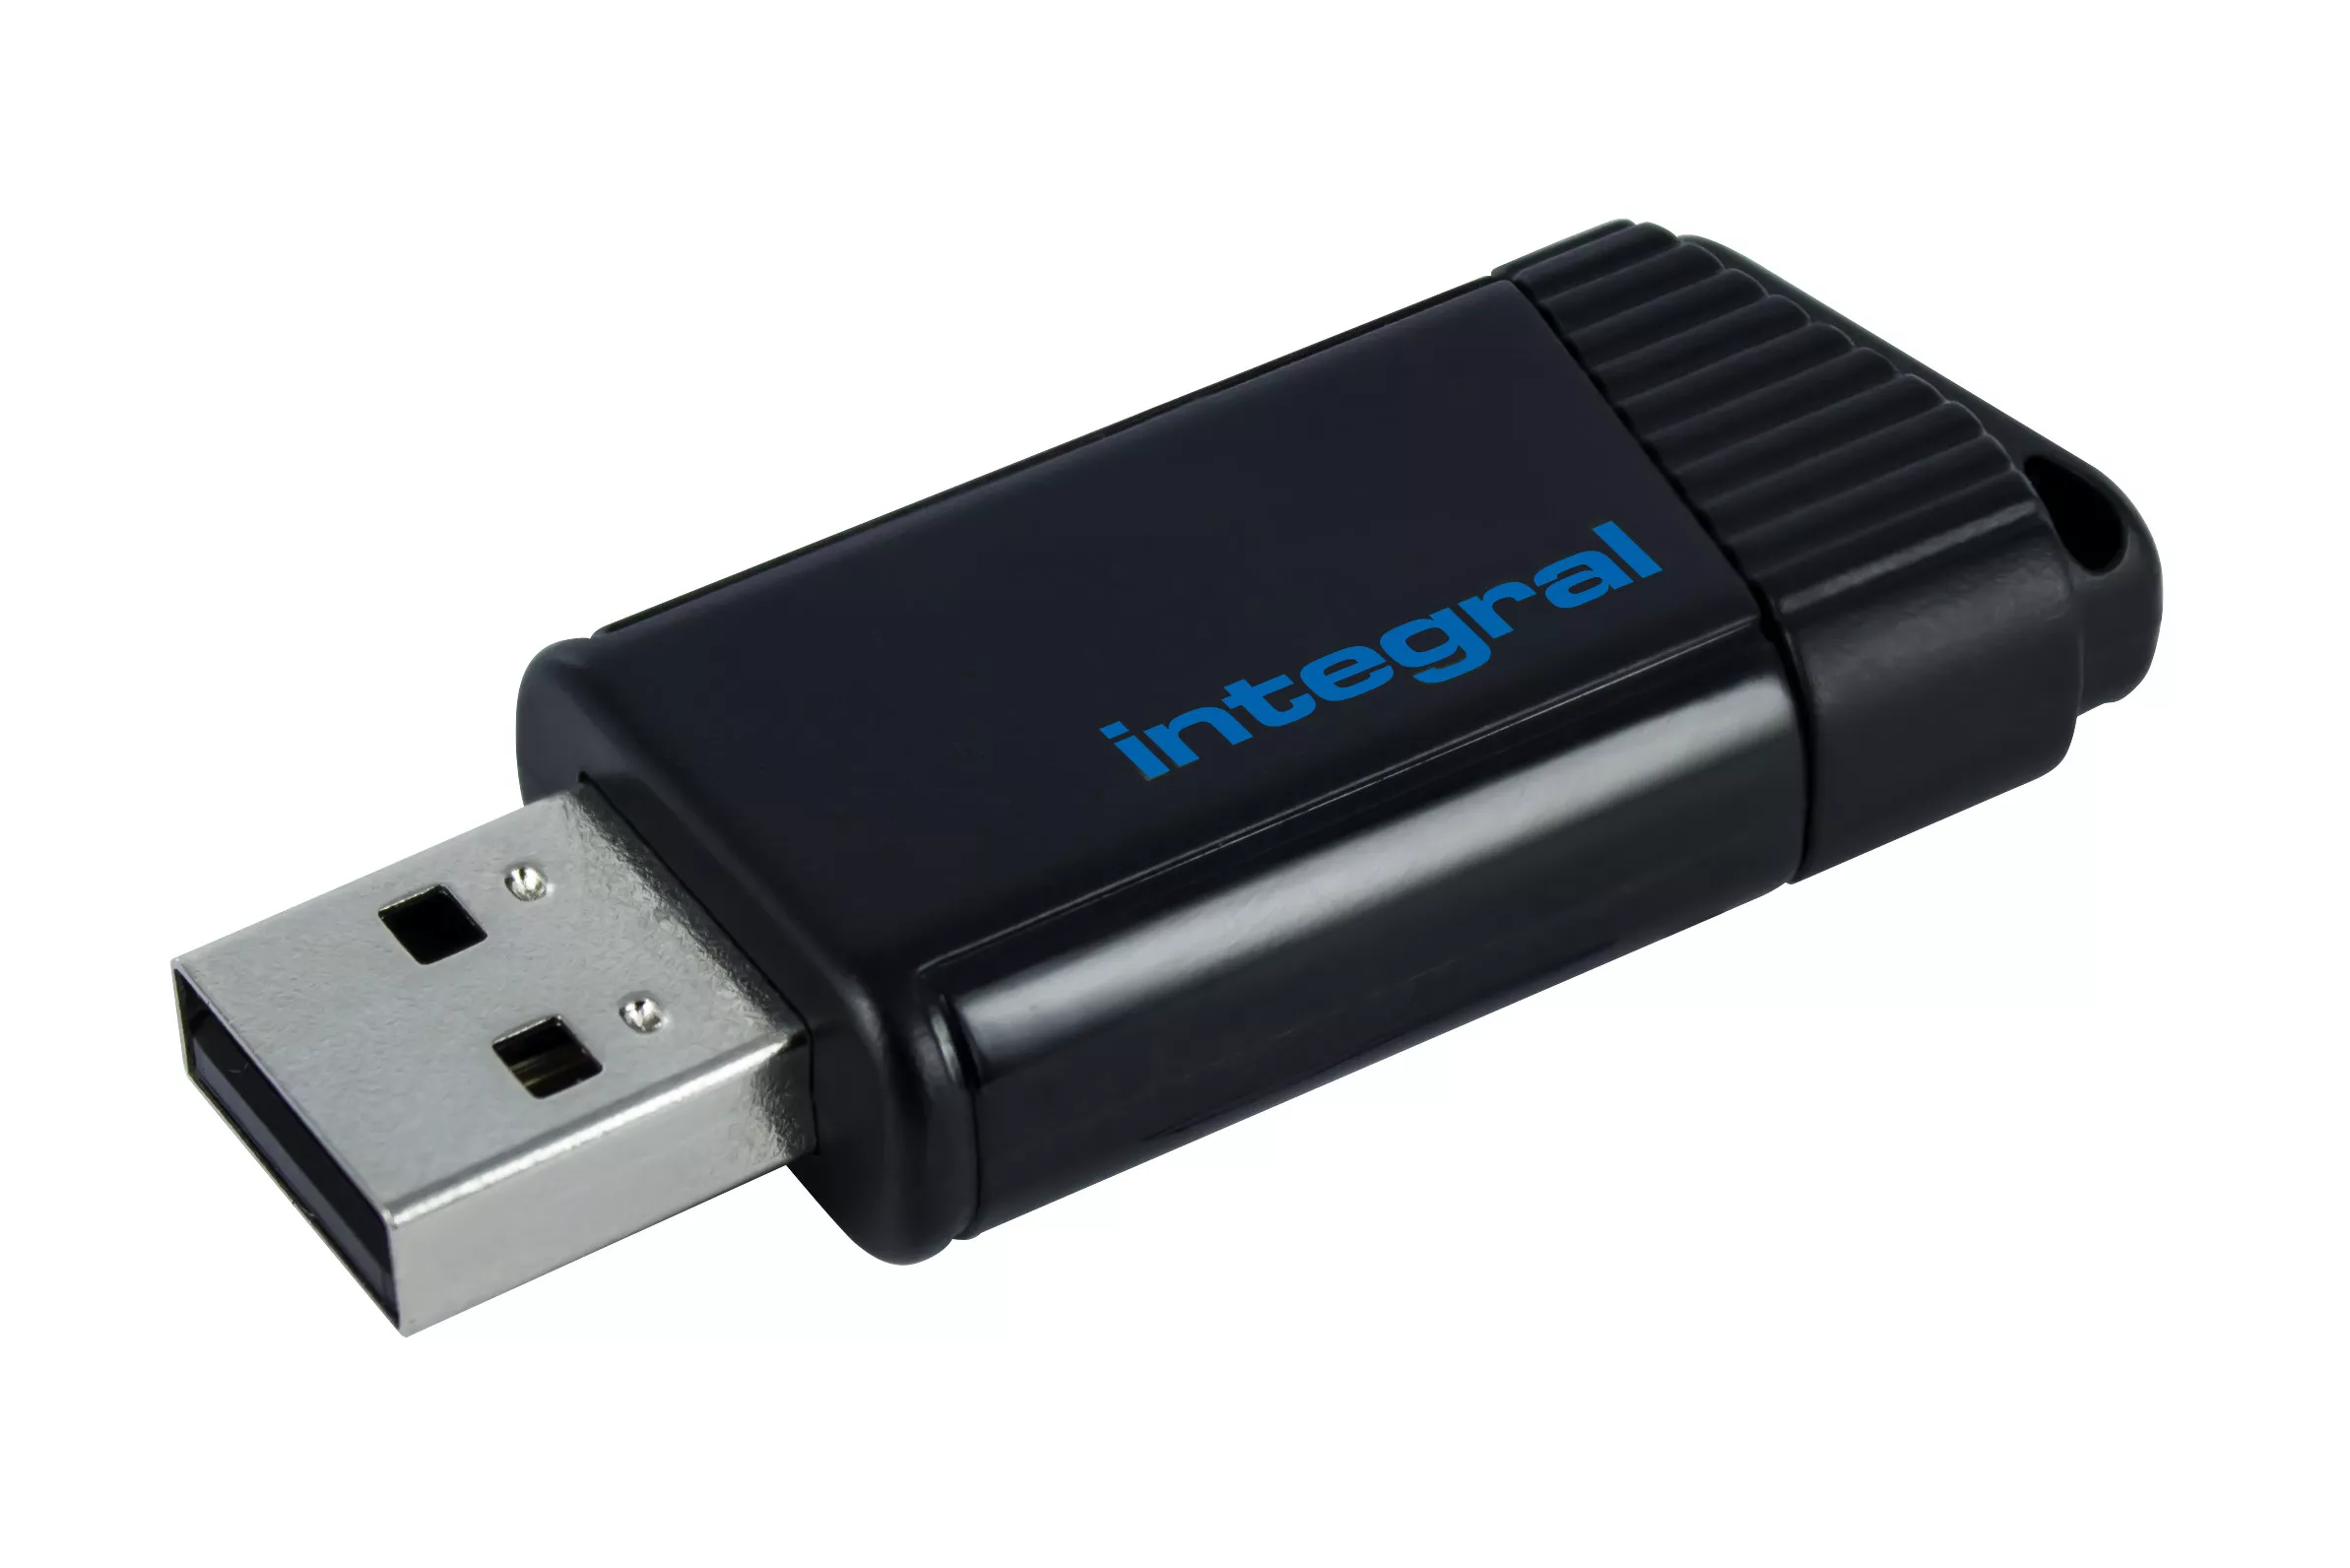 Achat Integral 16GB USB2.0 DRIVE PULSE BLUE INTEGRAL et autres produits de la marque Integral